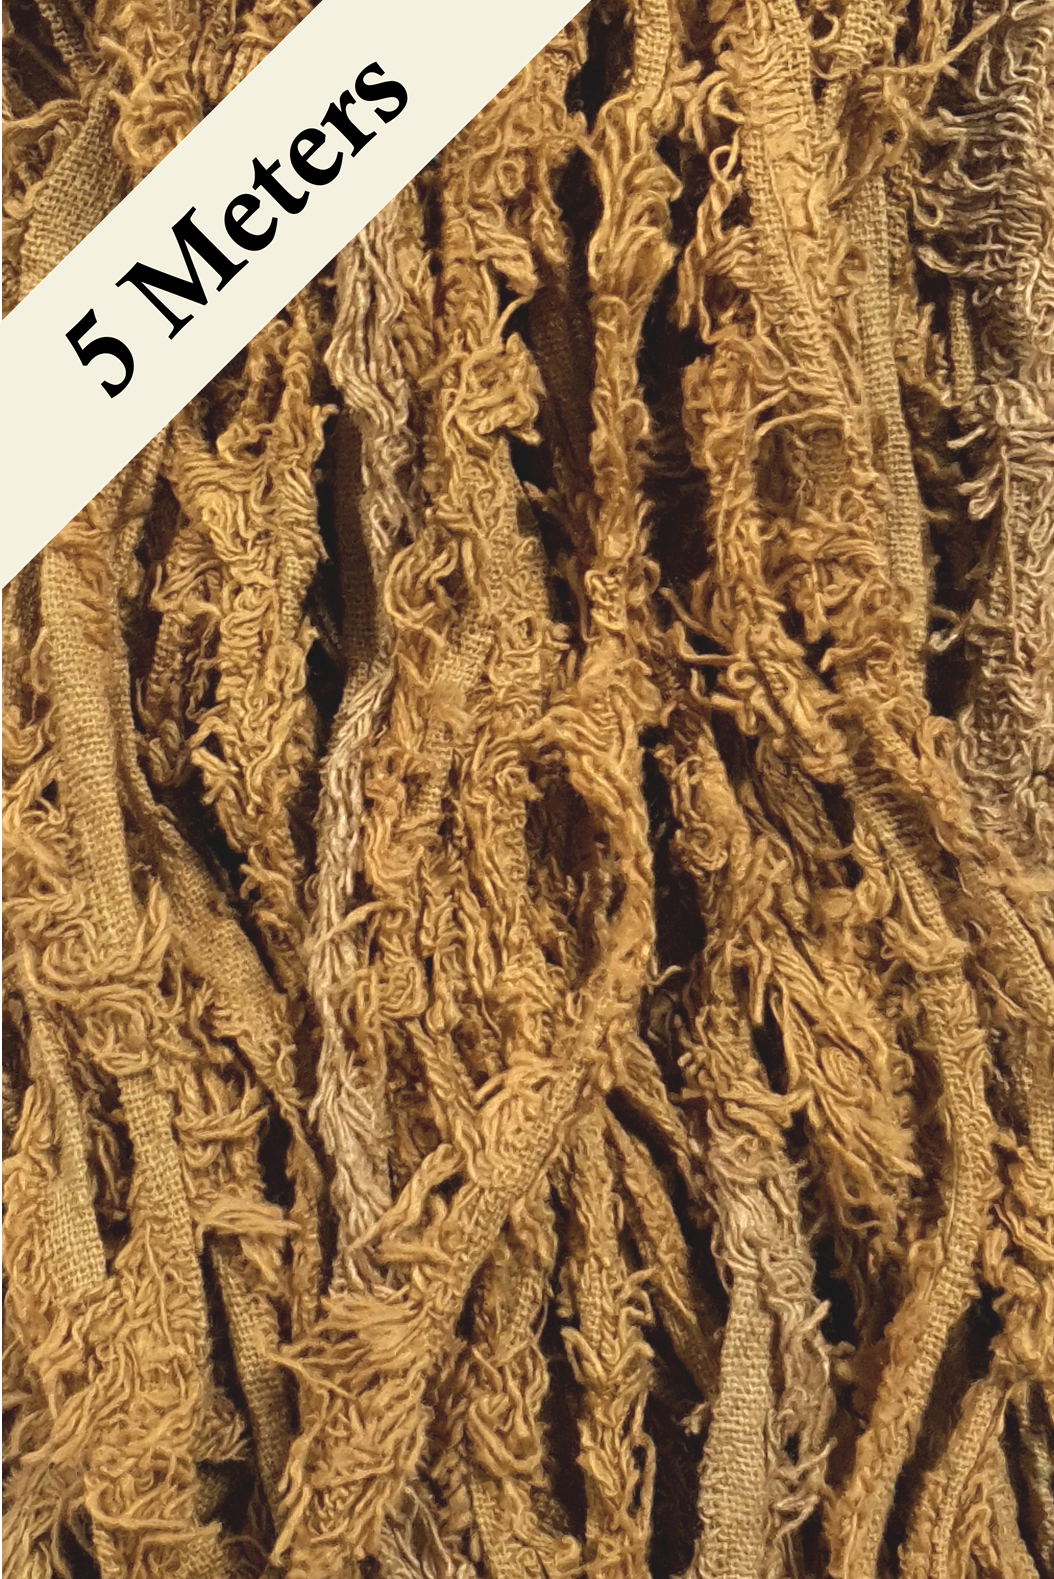 Cotton Frizz Ribbon - Mustard Seed - 5m Pack